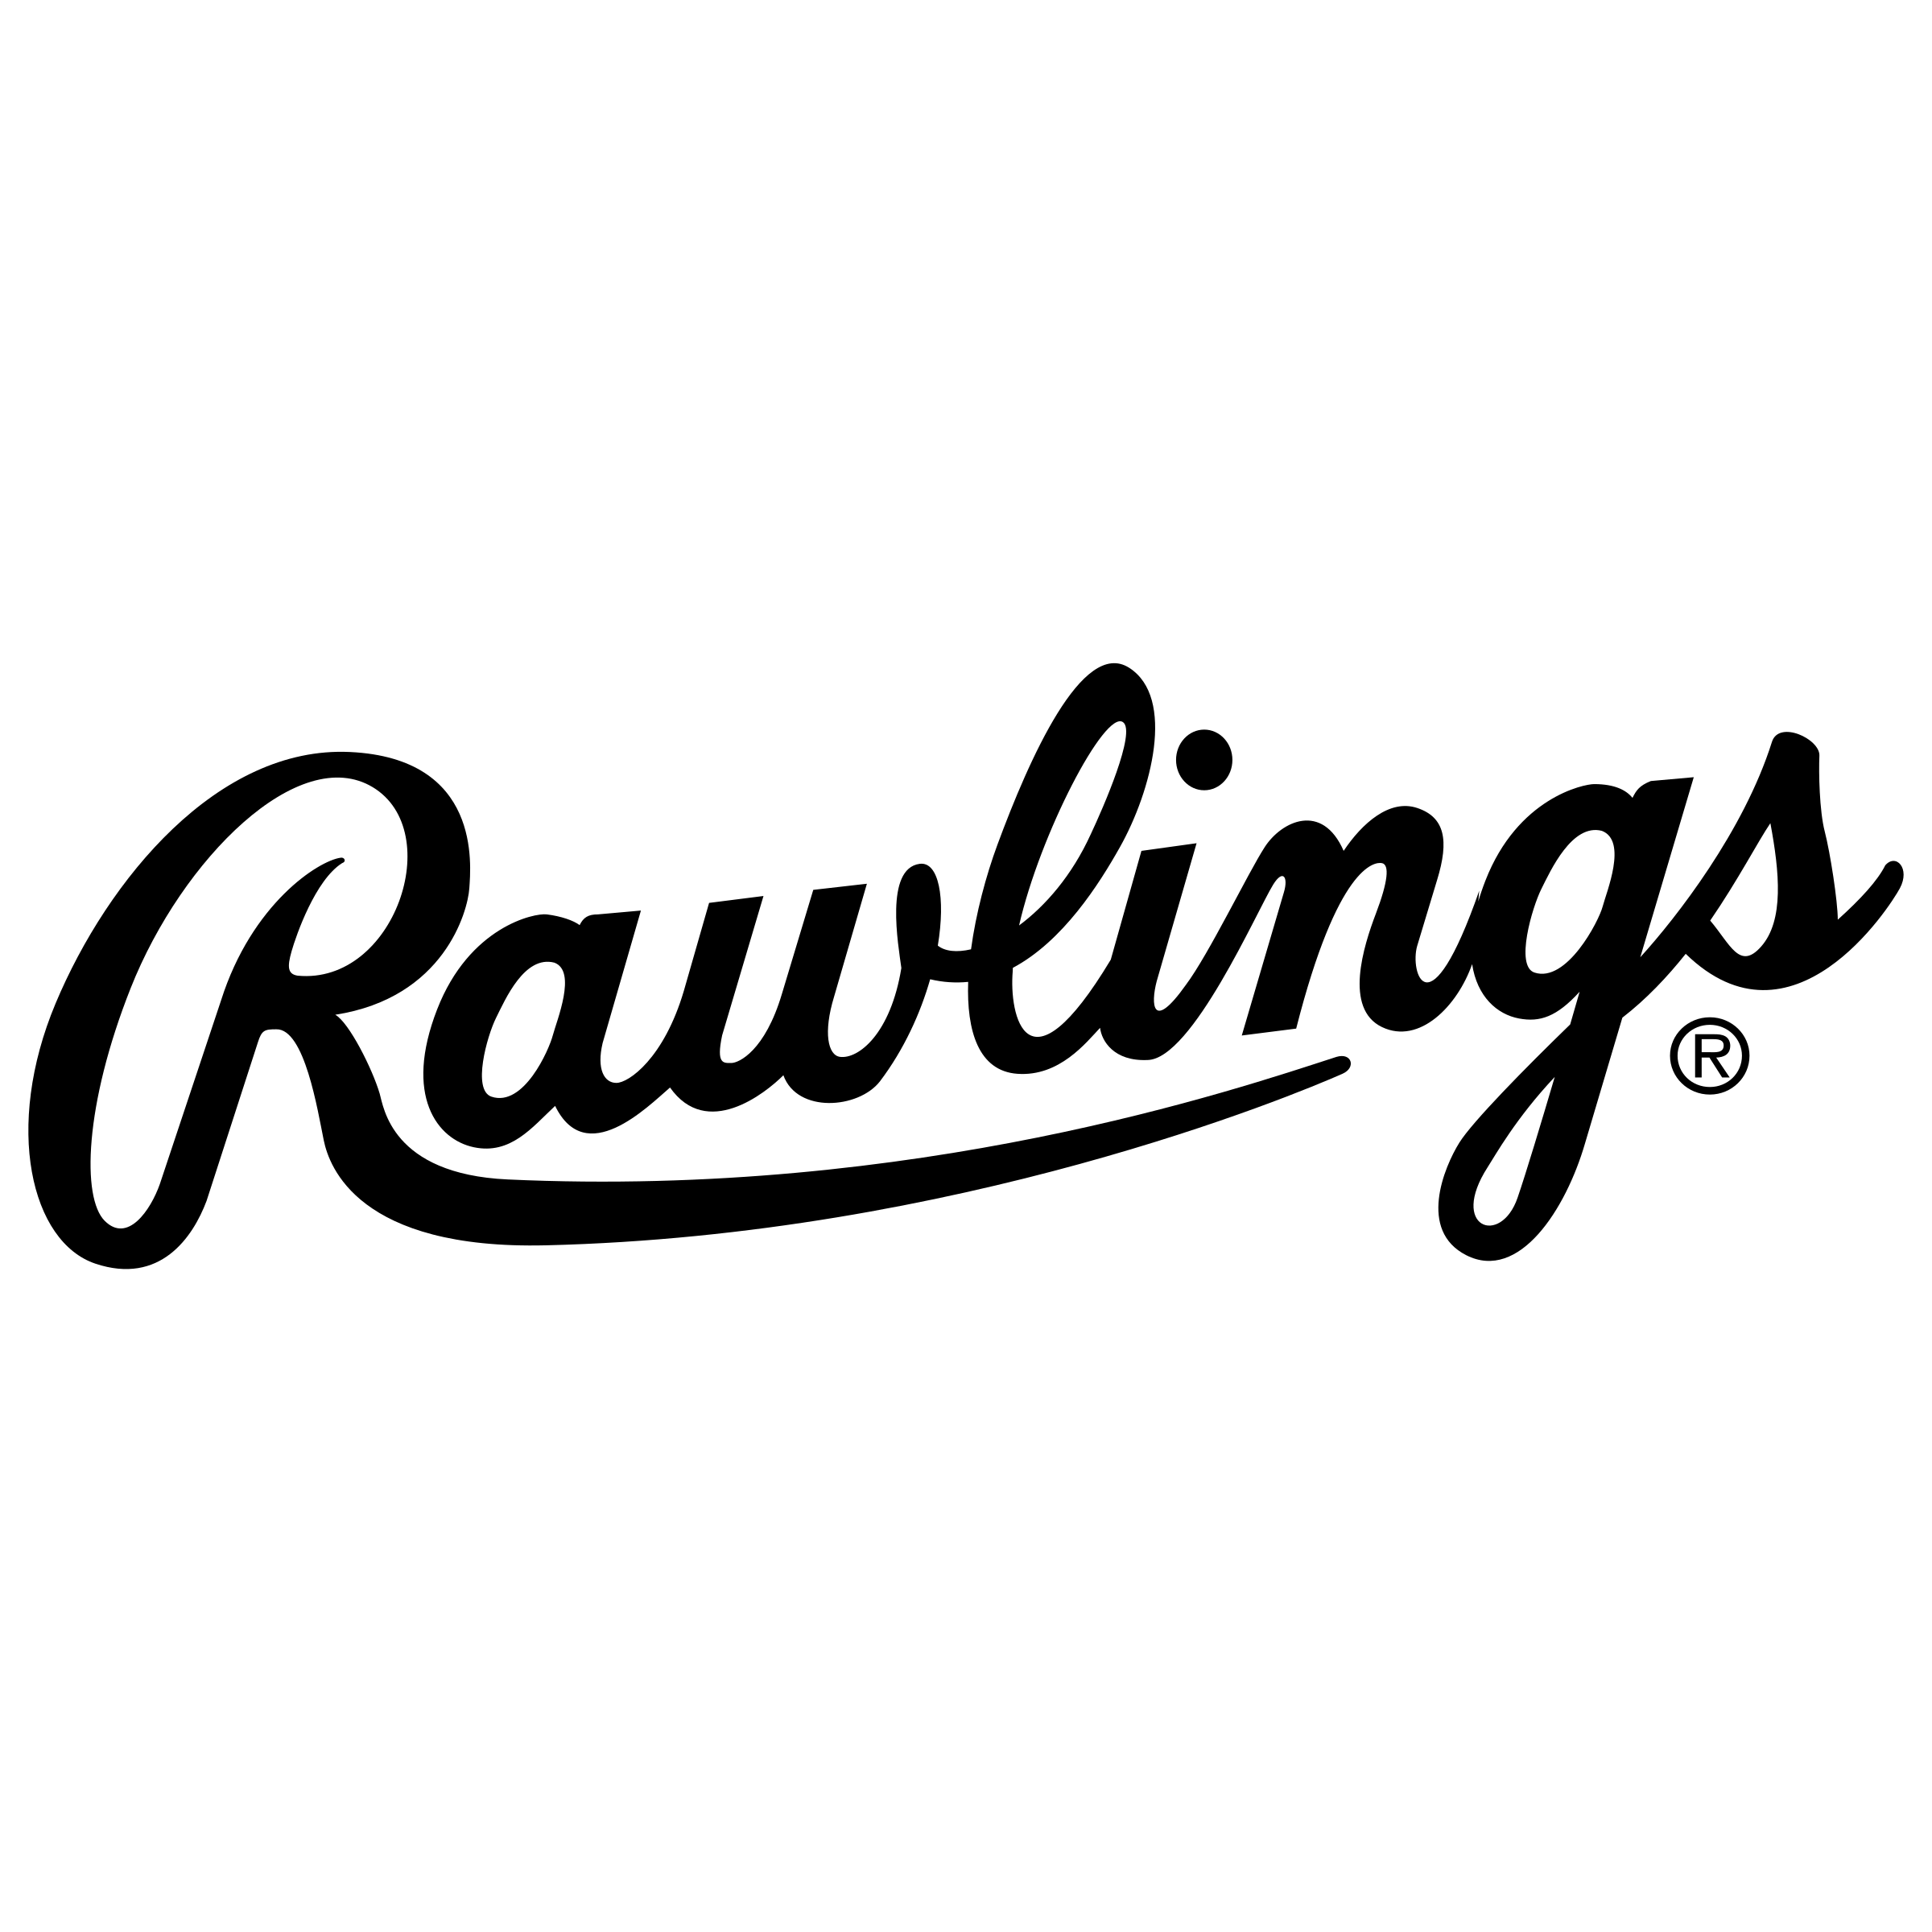 Rawlings R Logo - Rawlings Logo PNG Transparent & SVG Vector - Freebie Supply